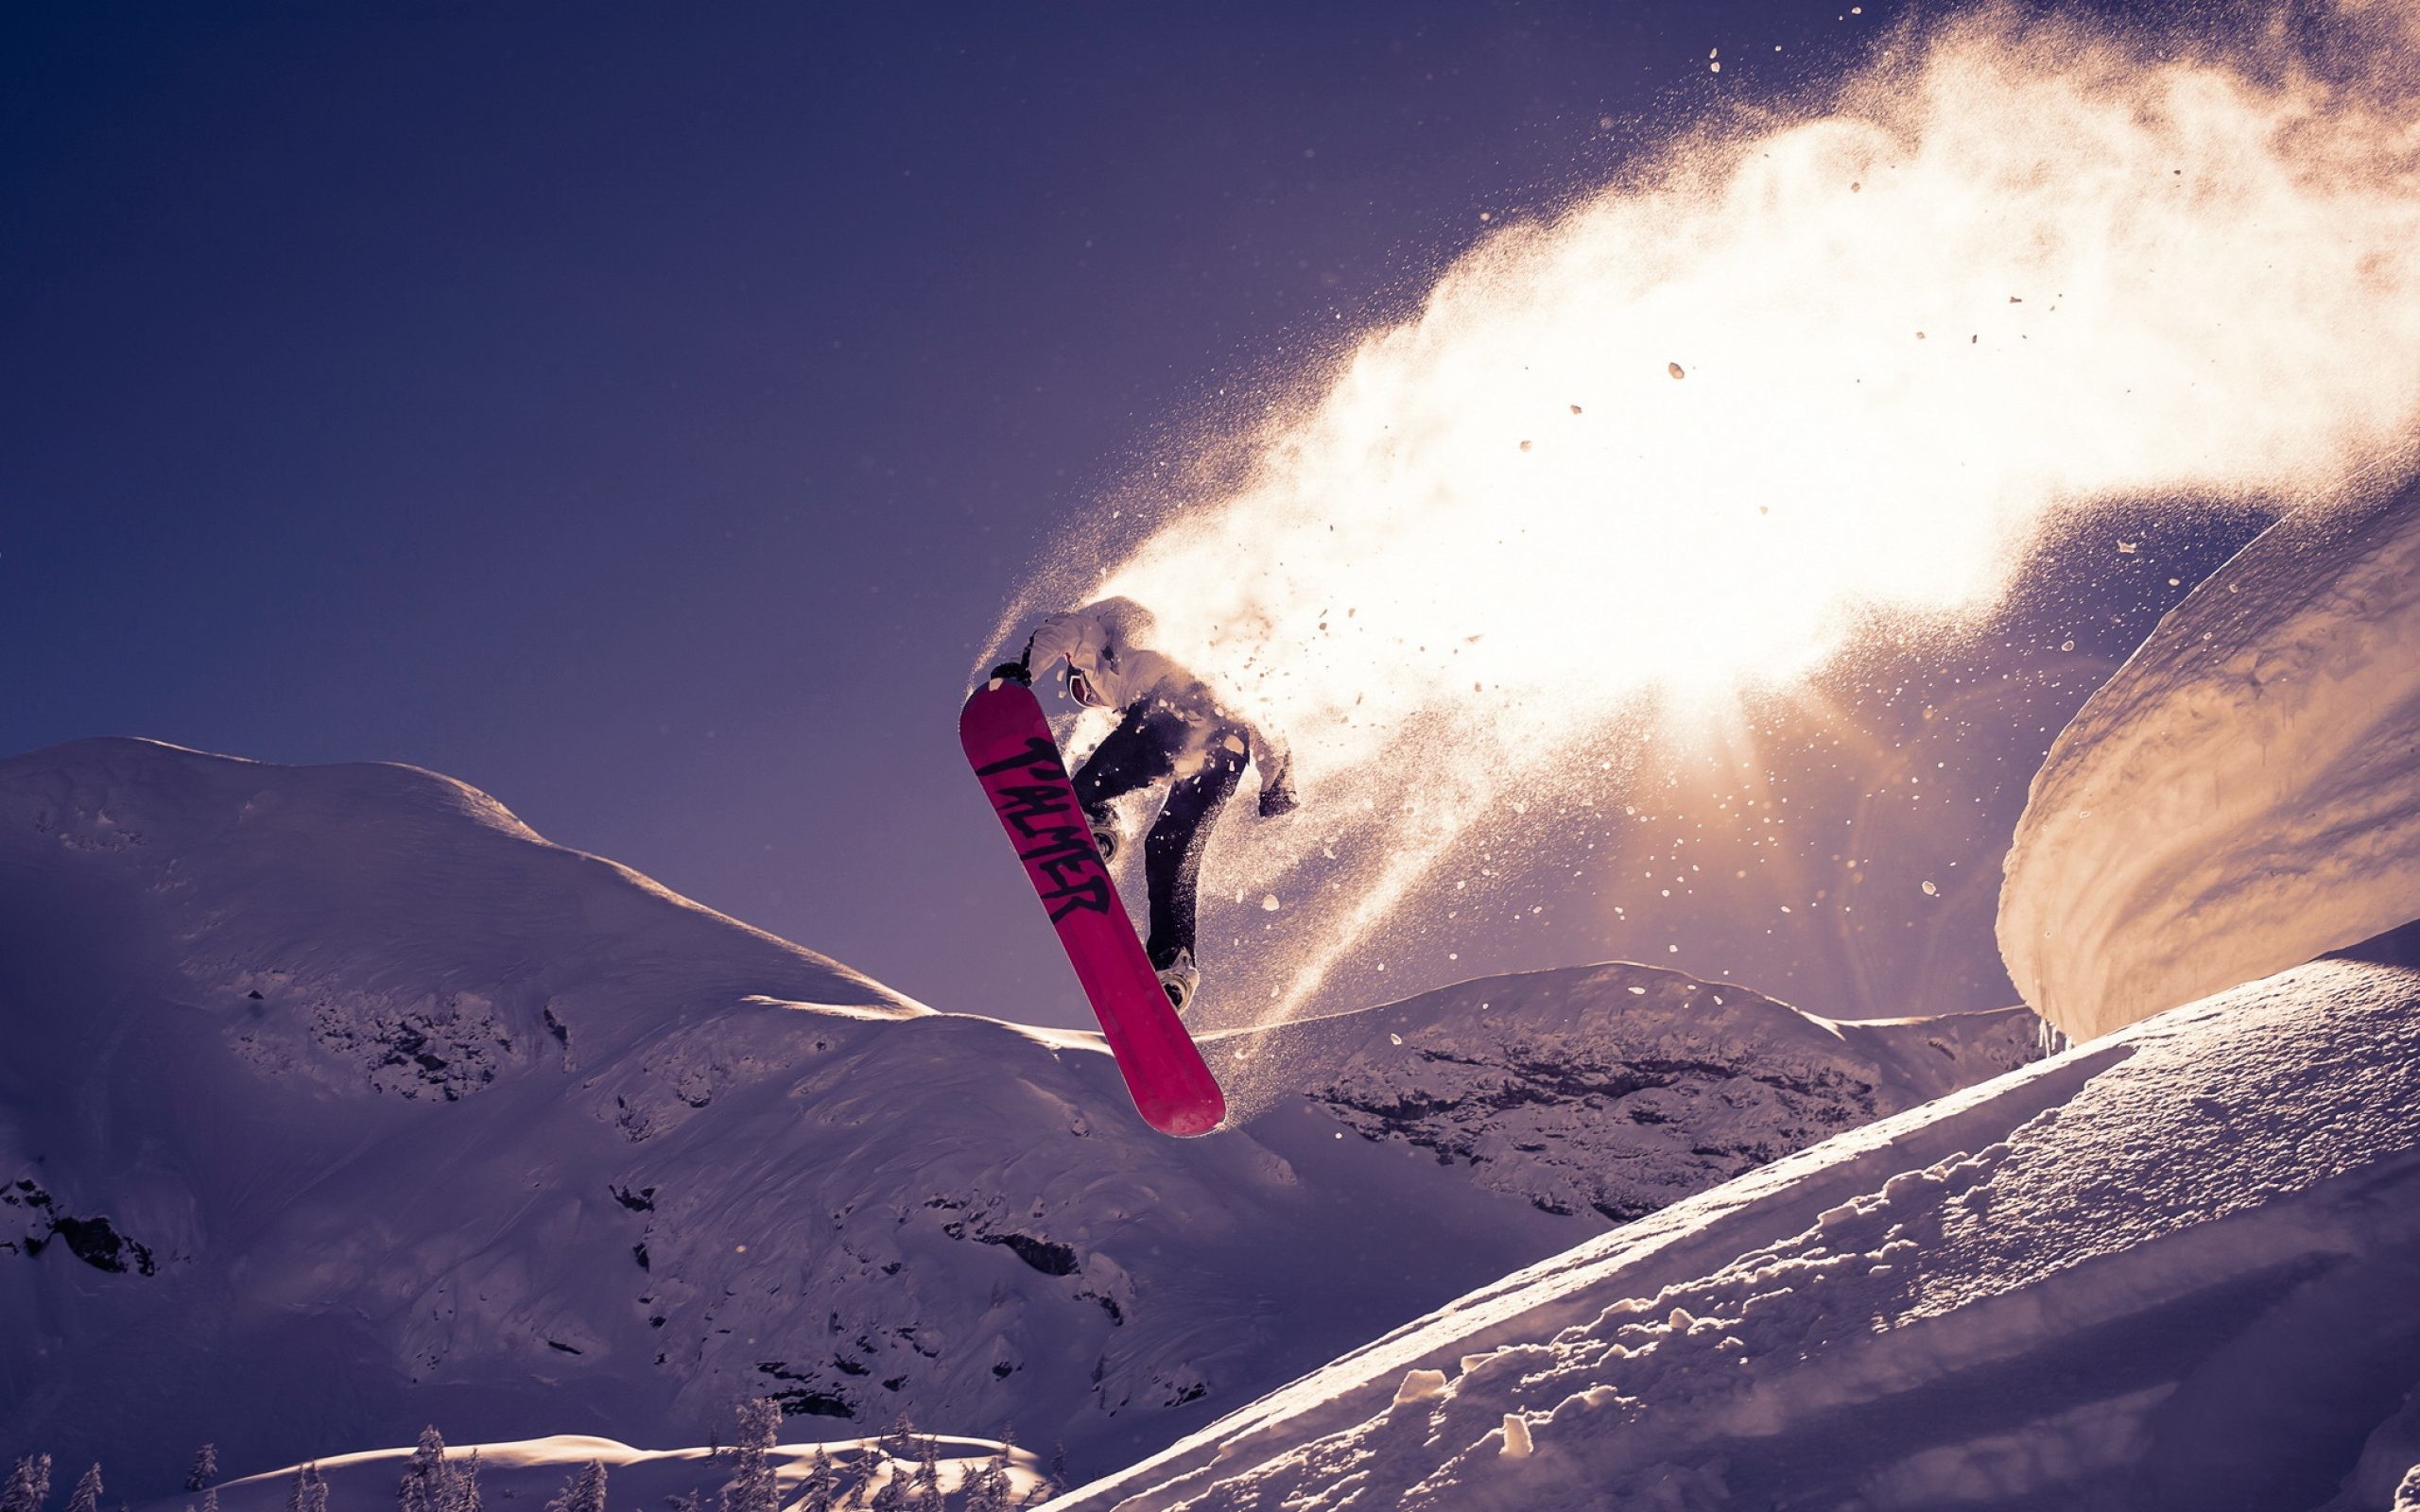 7986 Snowboard Wallpaper Images Stock Photos  Vectors  Shutterstock